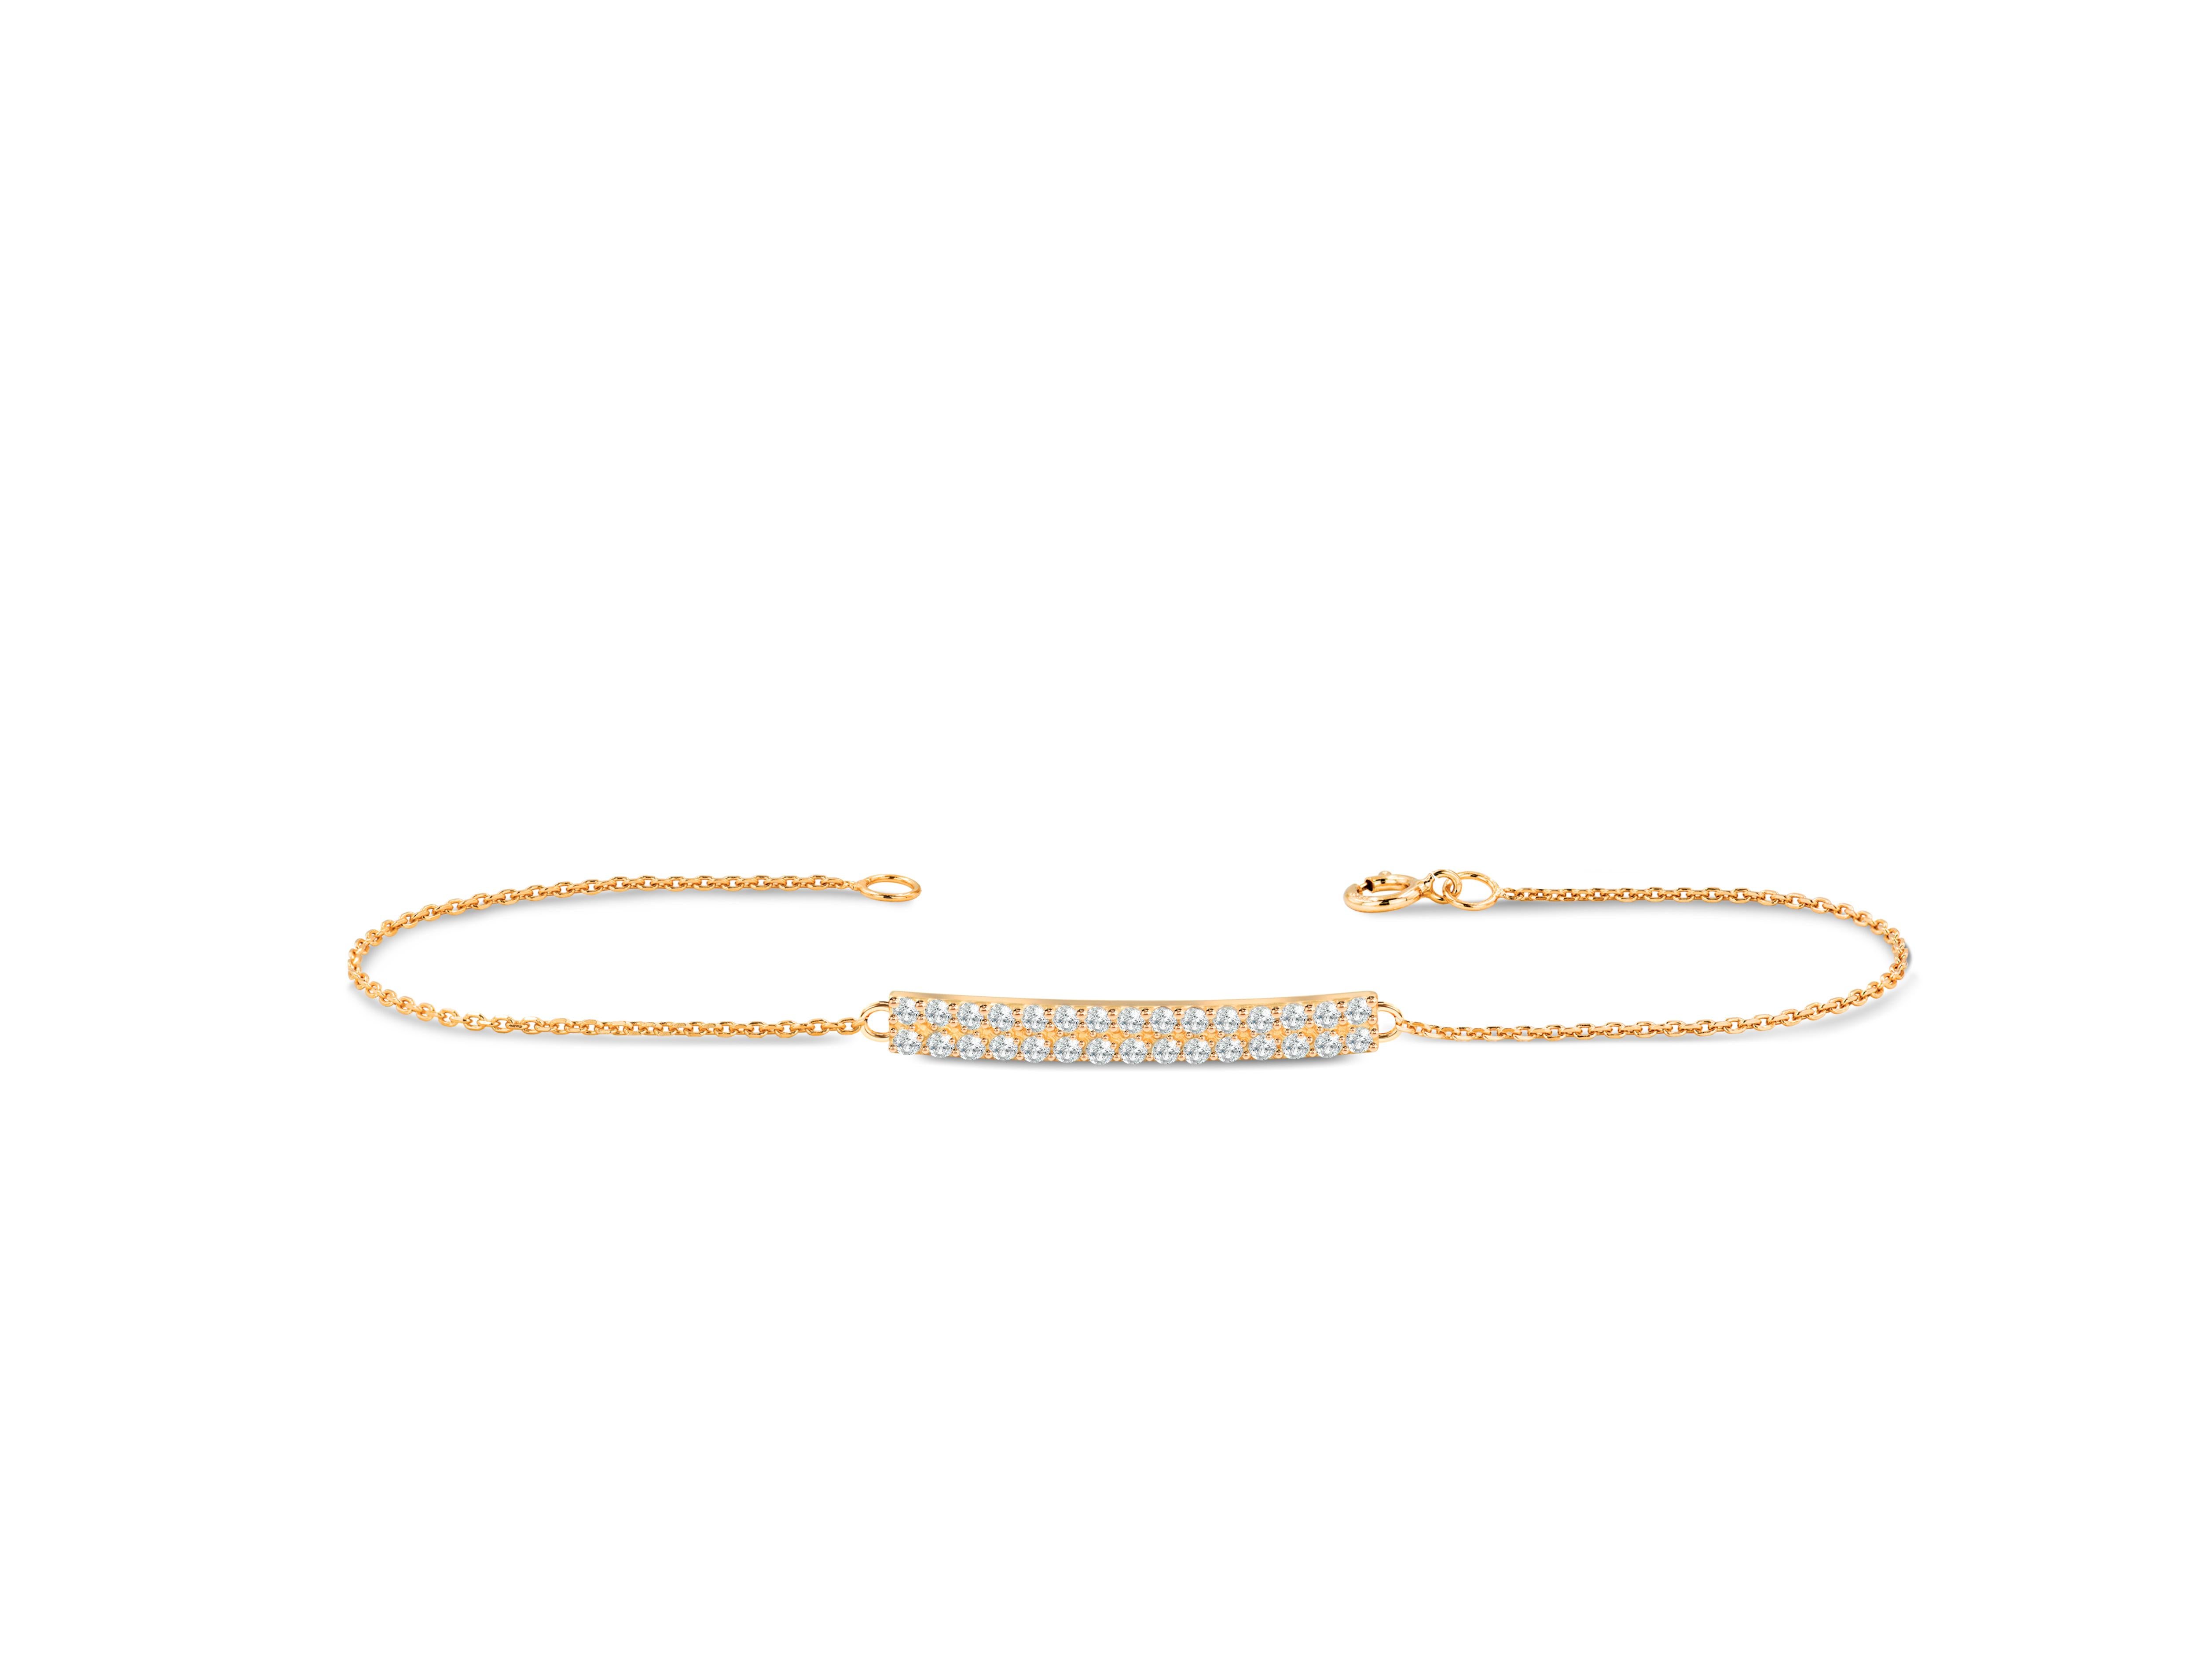 Diamond curved bar bracelet  / 18K Gold / Solid gold bar bracelet / Genuine diamond bracelet / Dainty Diamond bracelet /Real Gold Bracelet /  Bolo Bracelet 

Diamond bar bracelet, diamond bar, statement bracelet, Unique bracelet, thin gold chain,